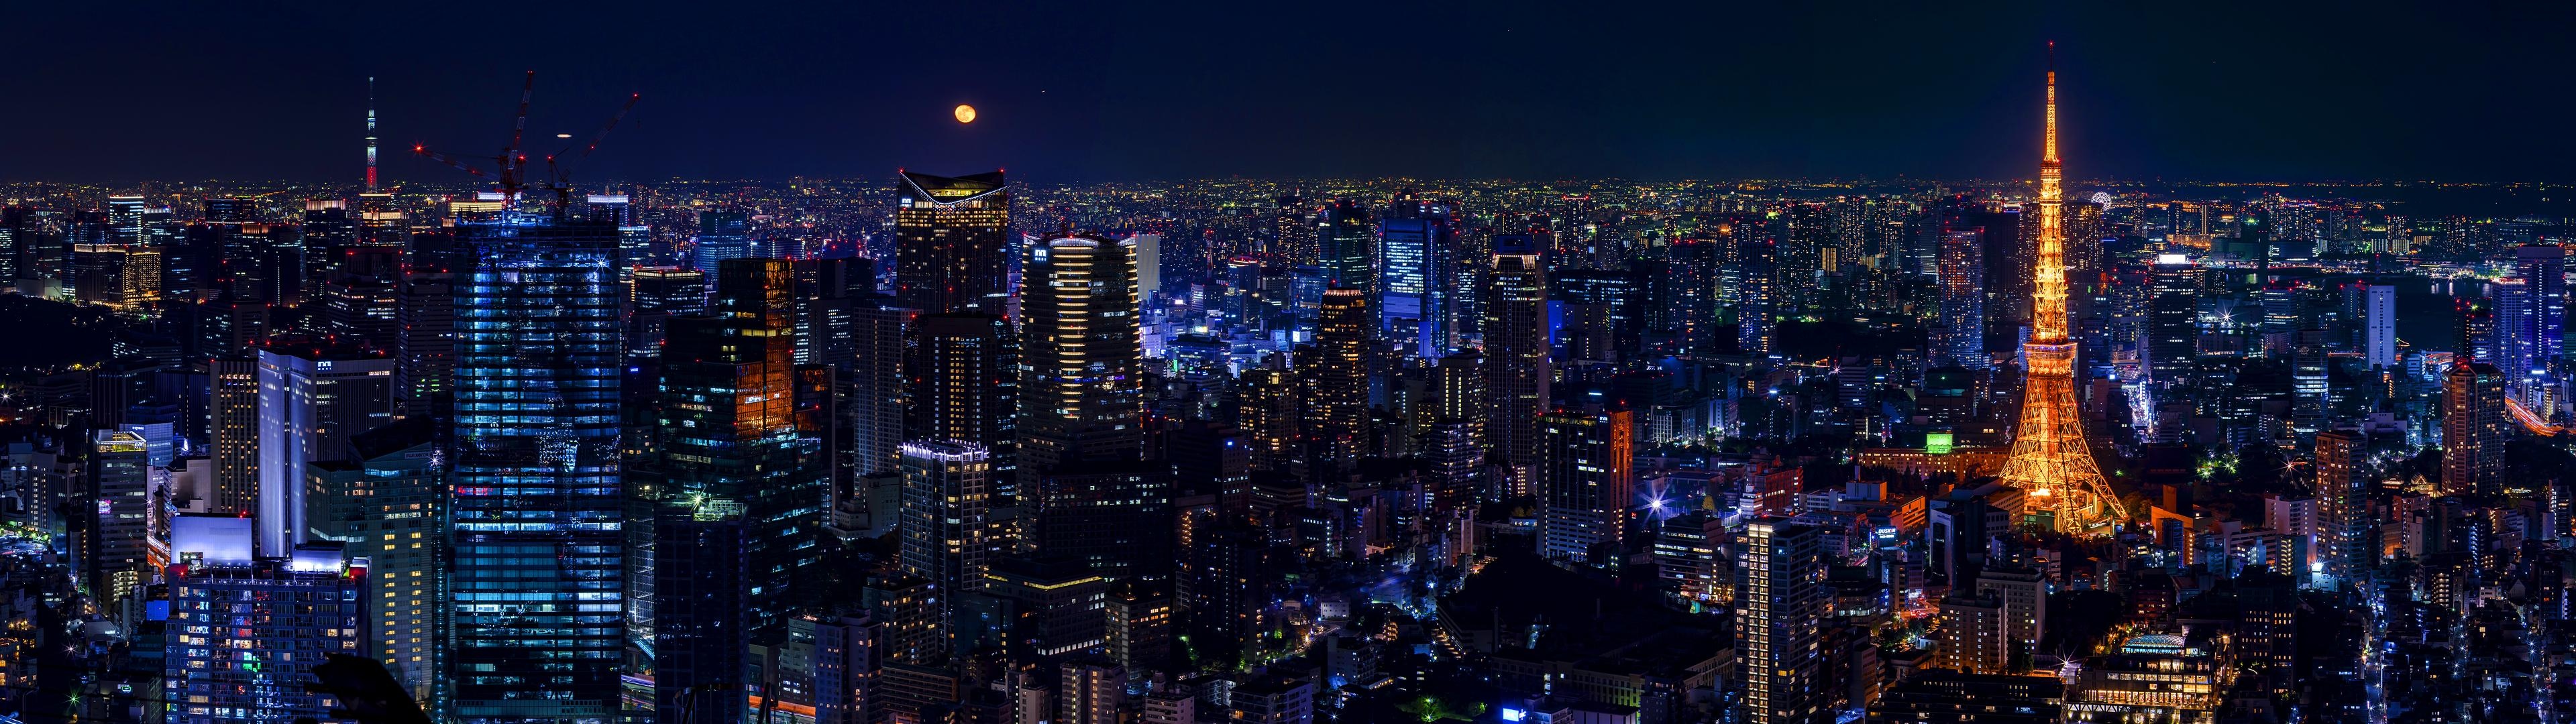 HD wallpaper, Nighttime Magic, 3840X1080 Dual Screen Desktop, Tokyo Skyline, Glimmering Lights, Desktop Dual Screen Tokyo Skyline Wallpaper, Urban Charm